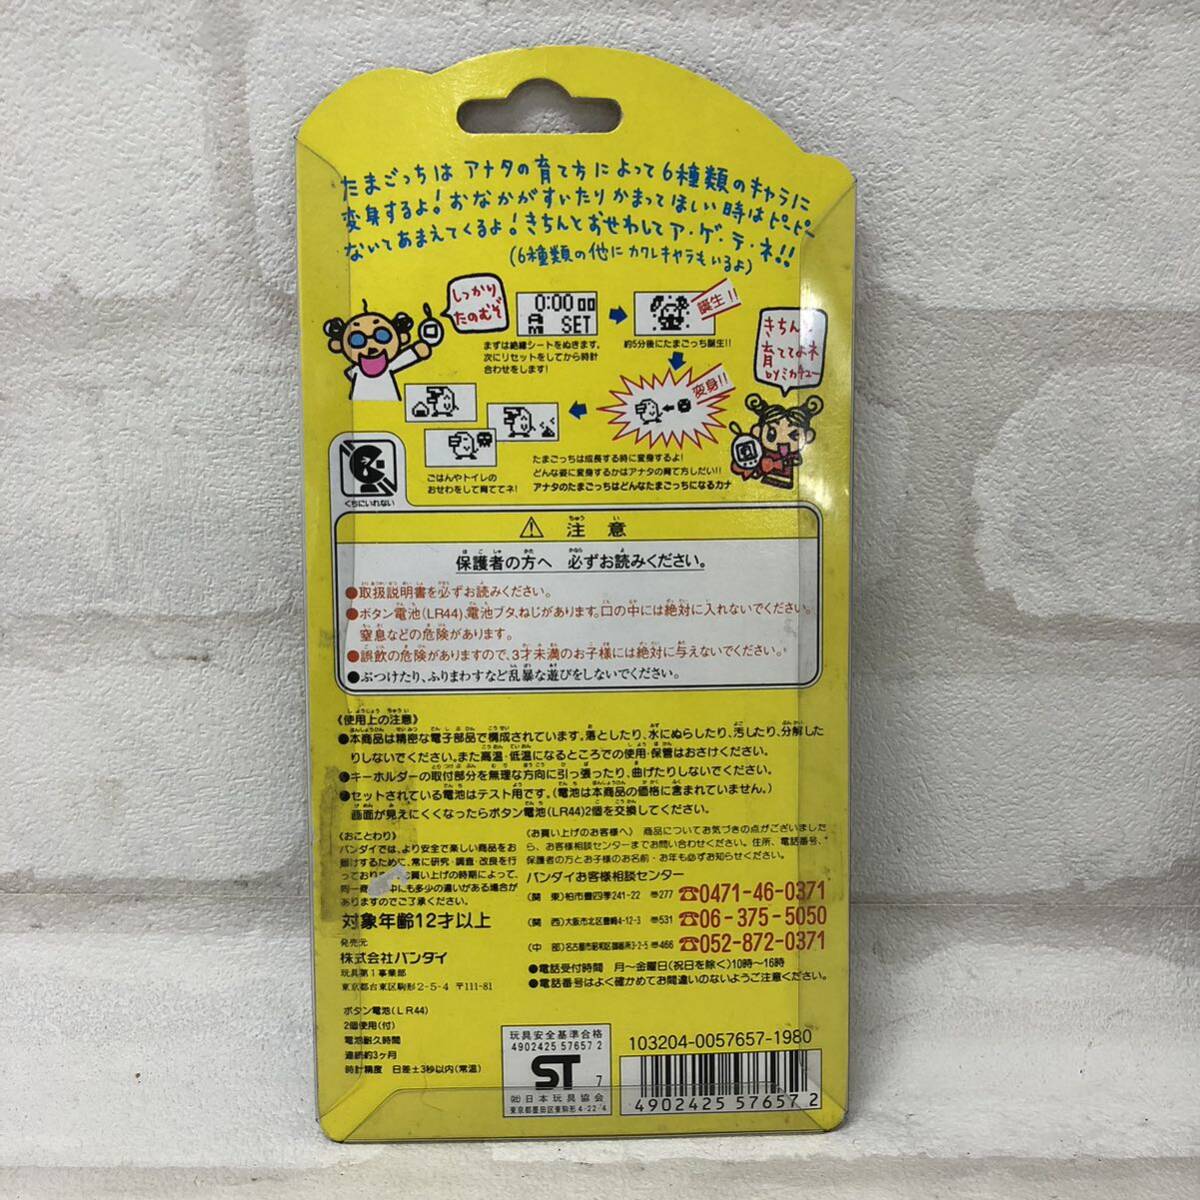 T# that time thing digital toy virtual pet 3 point set sale BANDAI Bandai Tamagotchi / pocket screw ke./ not insect ... futoshi kun 